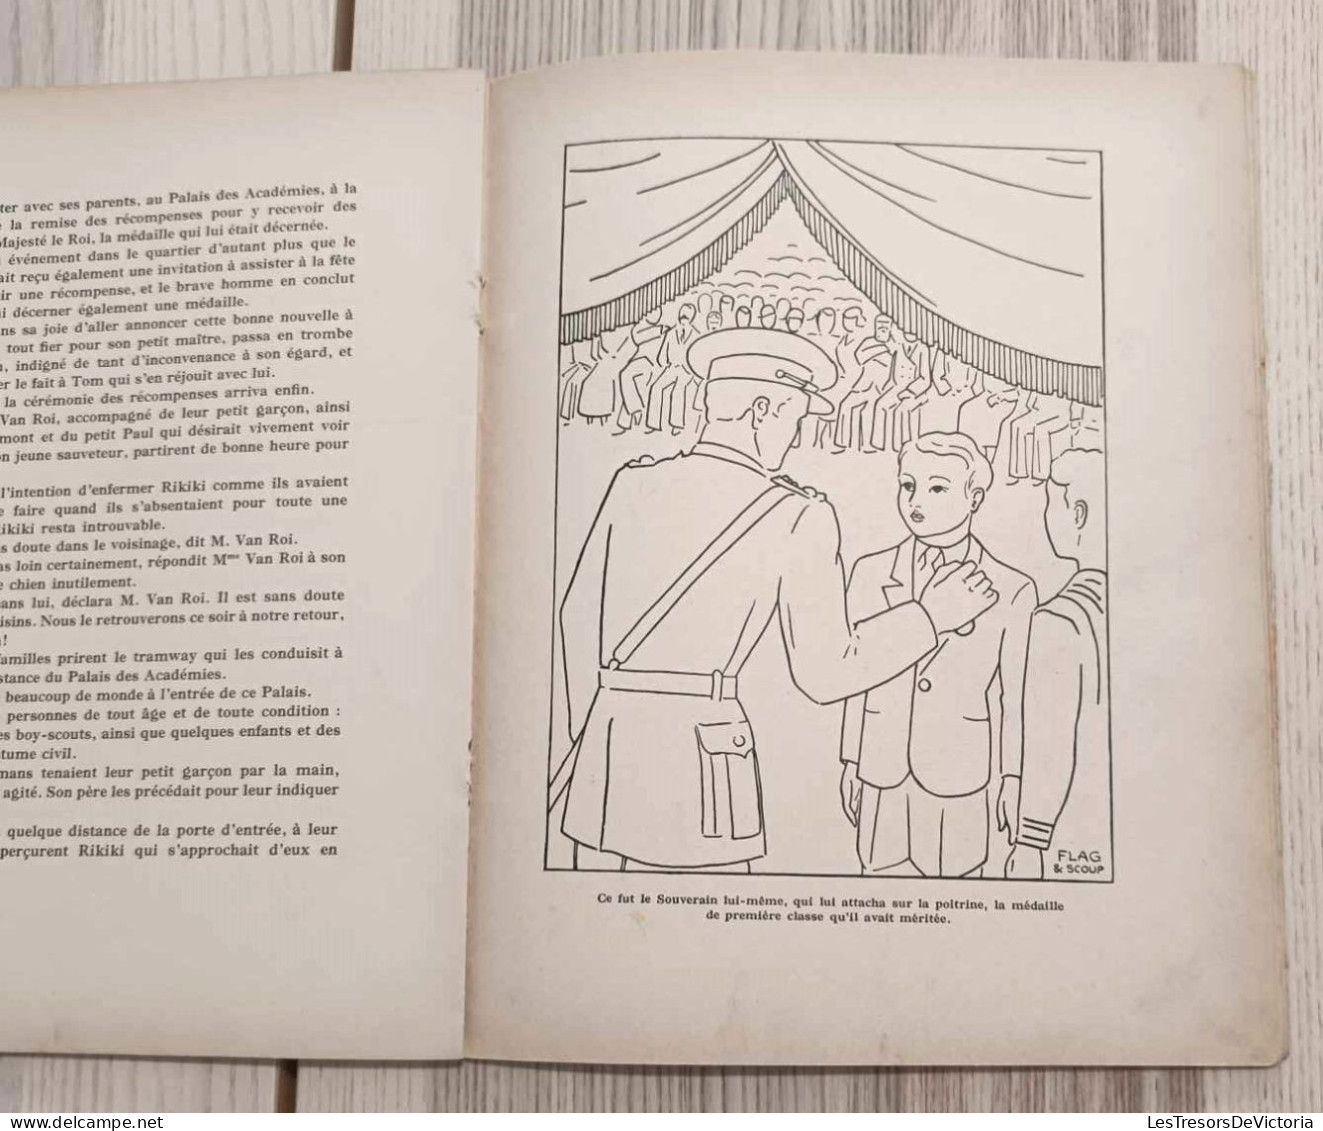 Pierre Et Rikiki - Livre Pour Enfant - A. Eberhart Sorel - Illustration Flag & Scoup - Racconti